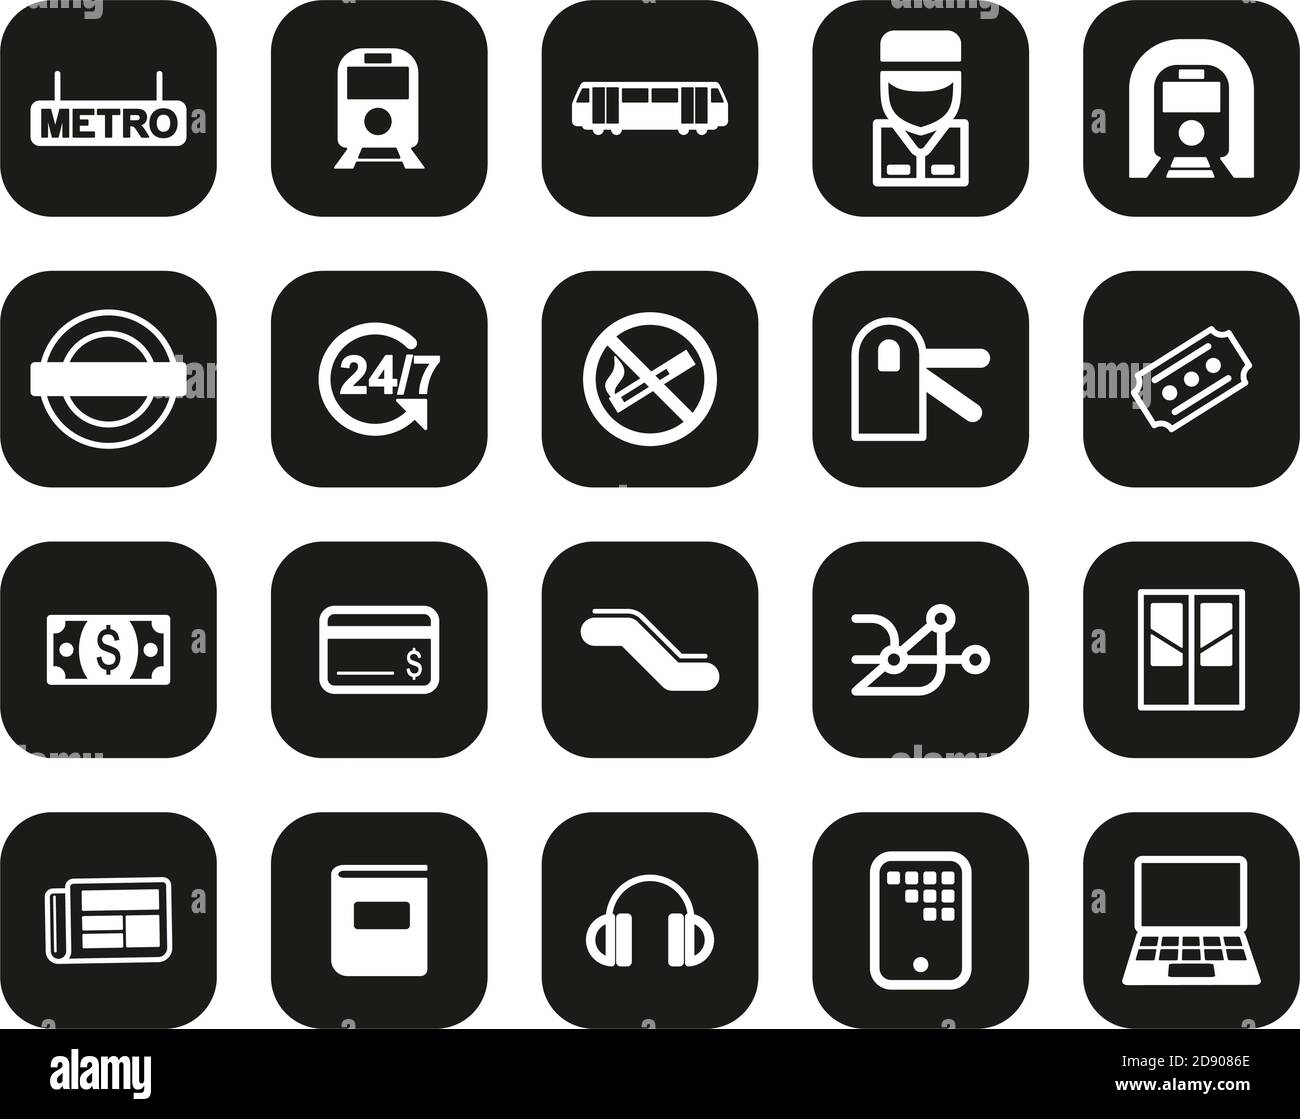 Metro Or Subway Icons White On Black Flat Design Set Big Stock Vector